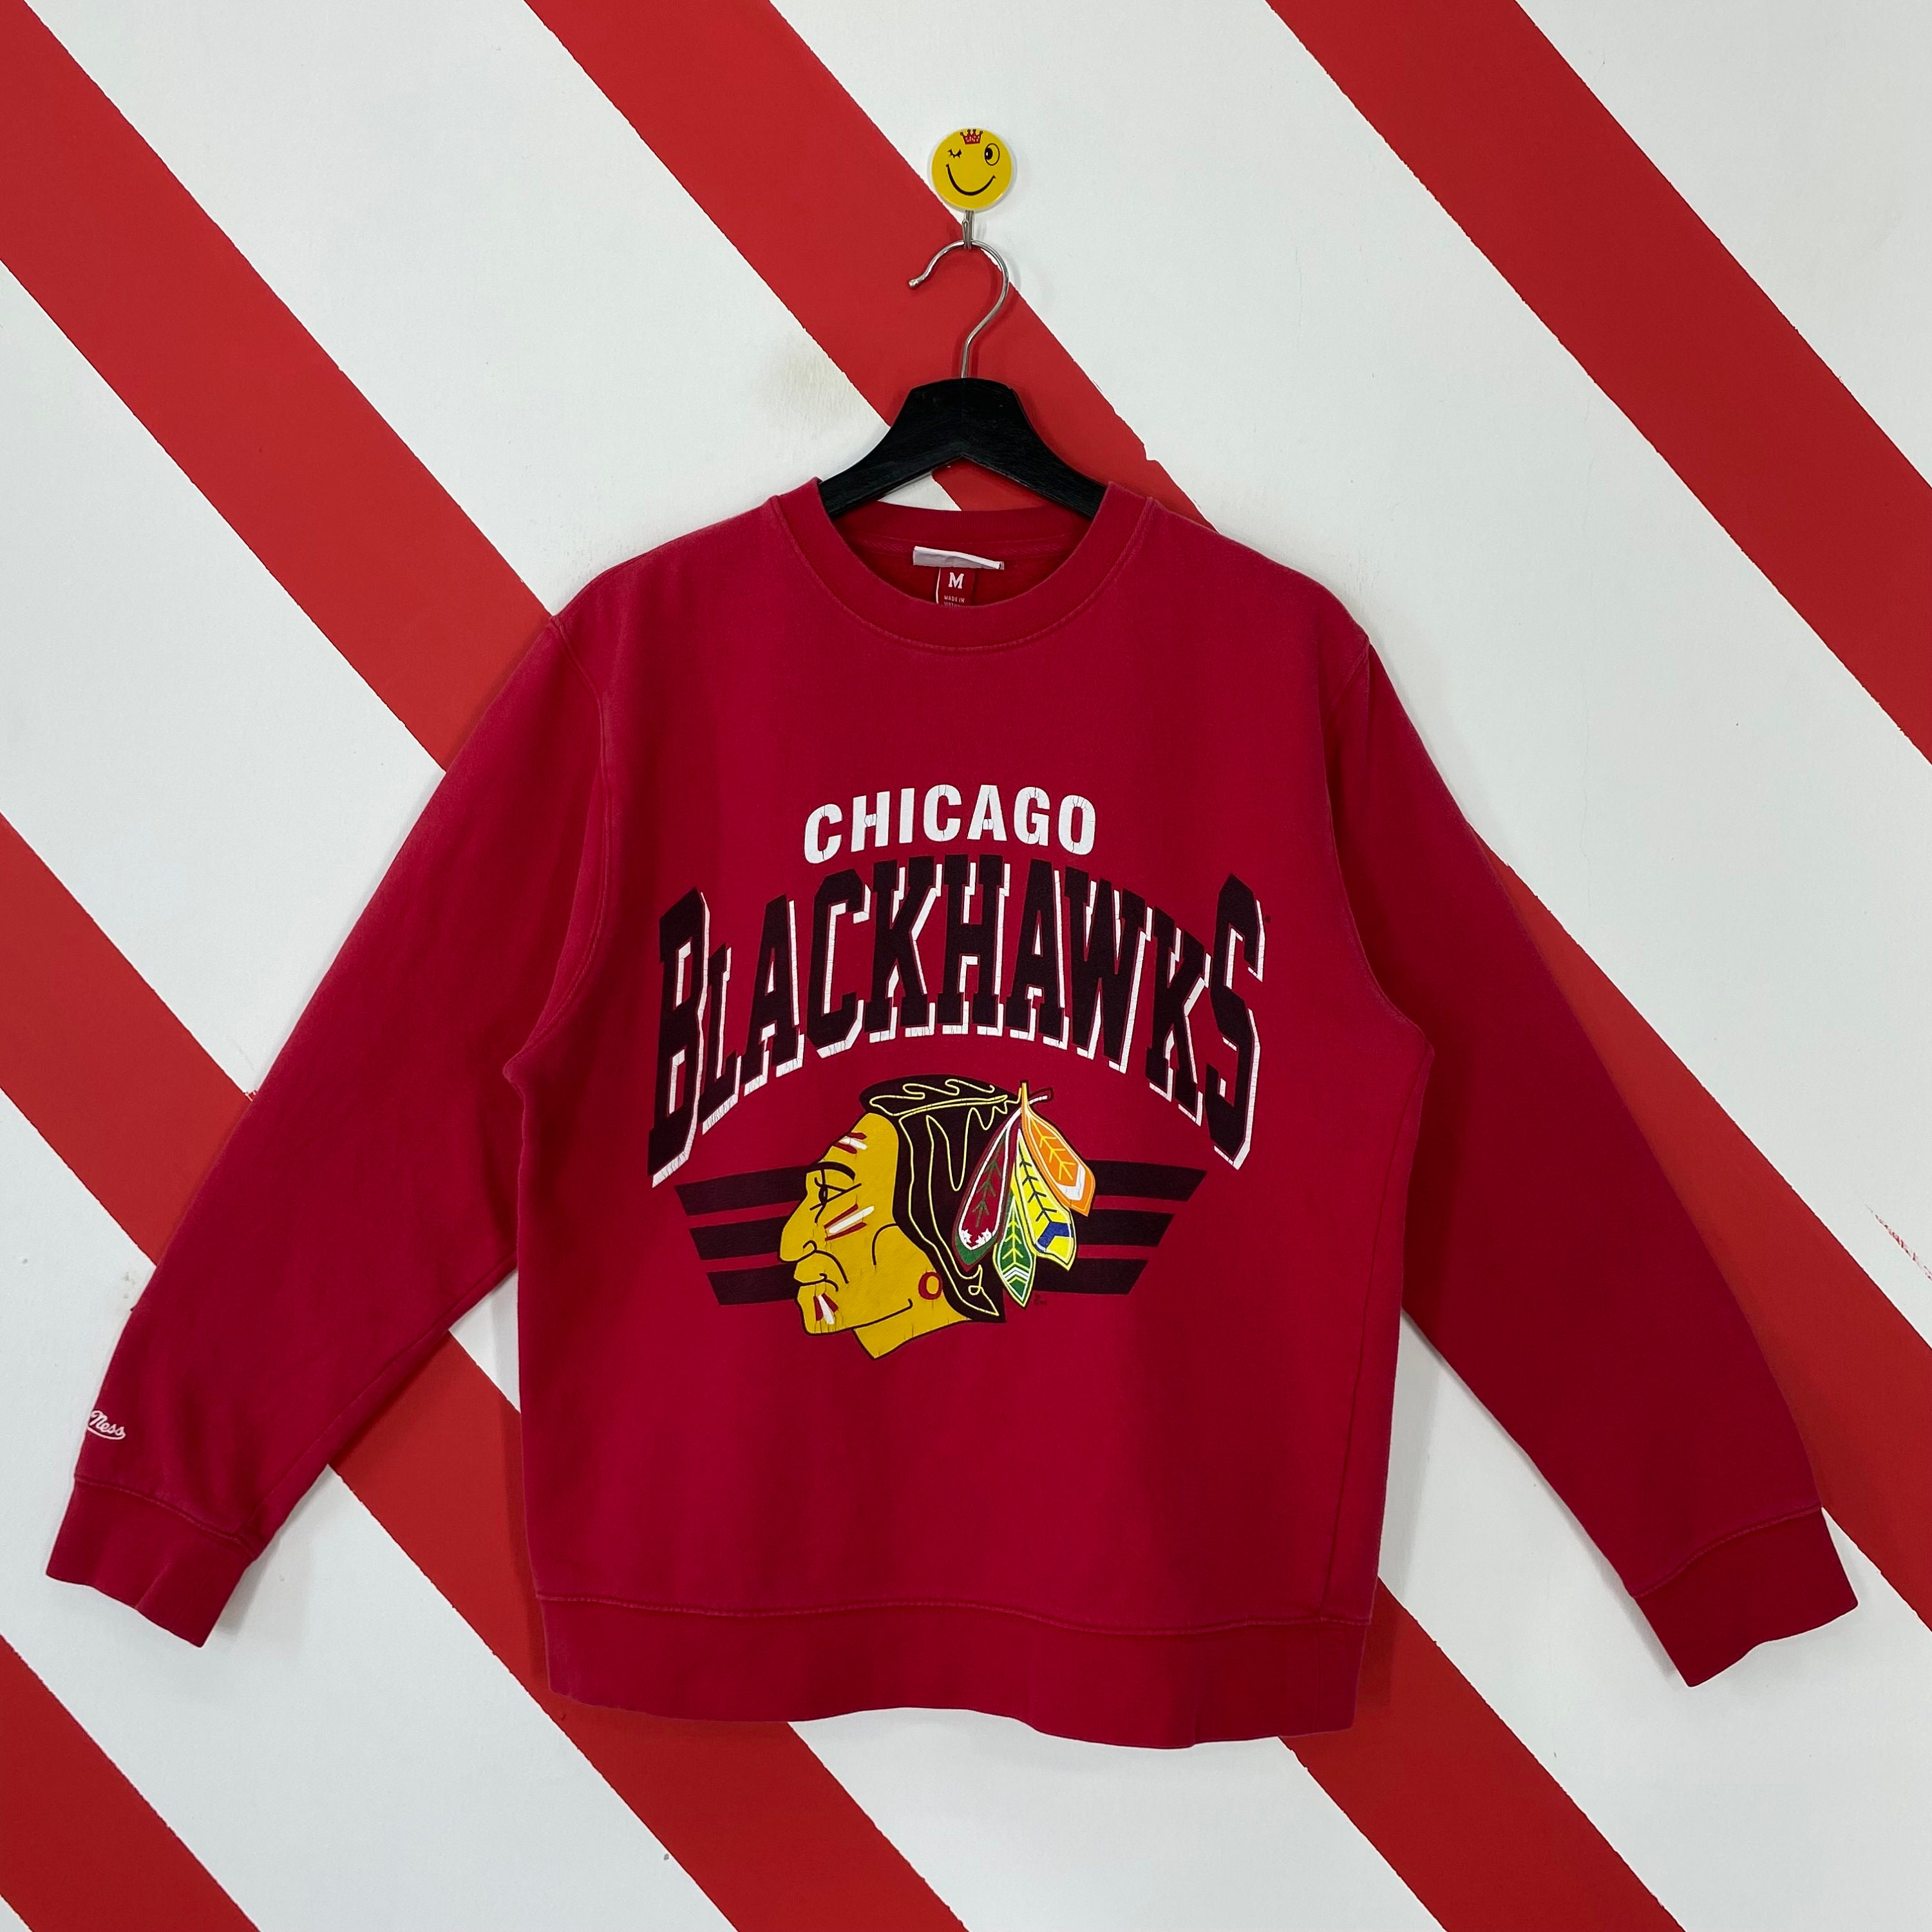 Buy a Womens Touch Chicago Blackhawks Hoodie Sweatshirt Online